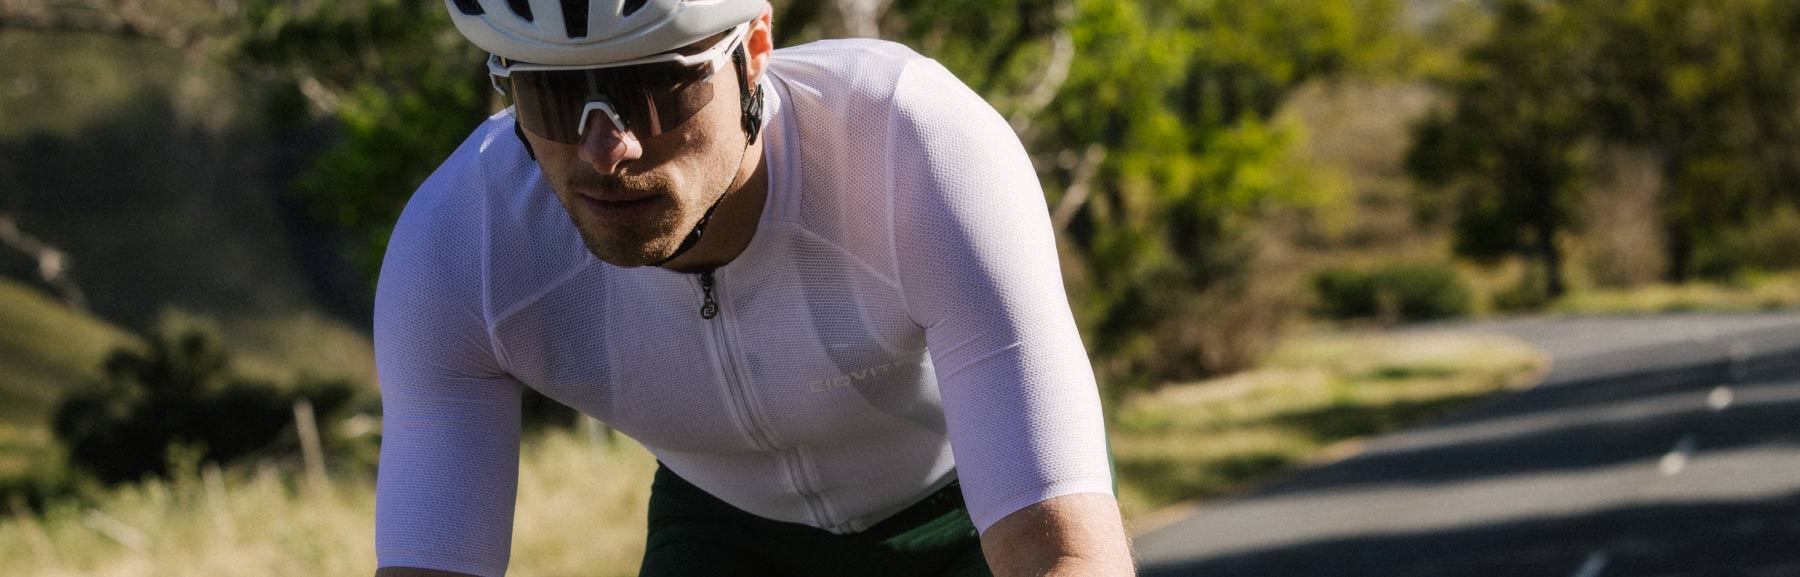 Men's Cycling Jerseys - Ciovita Australia